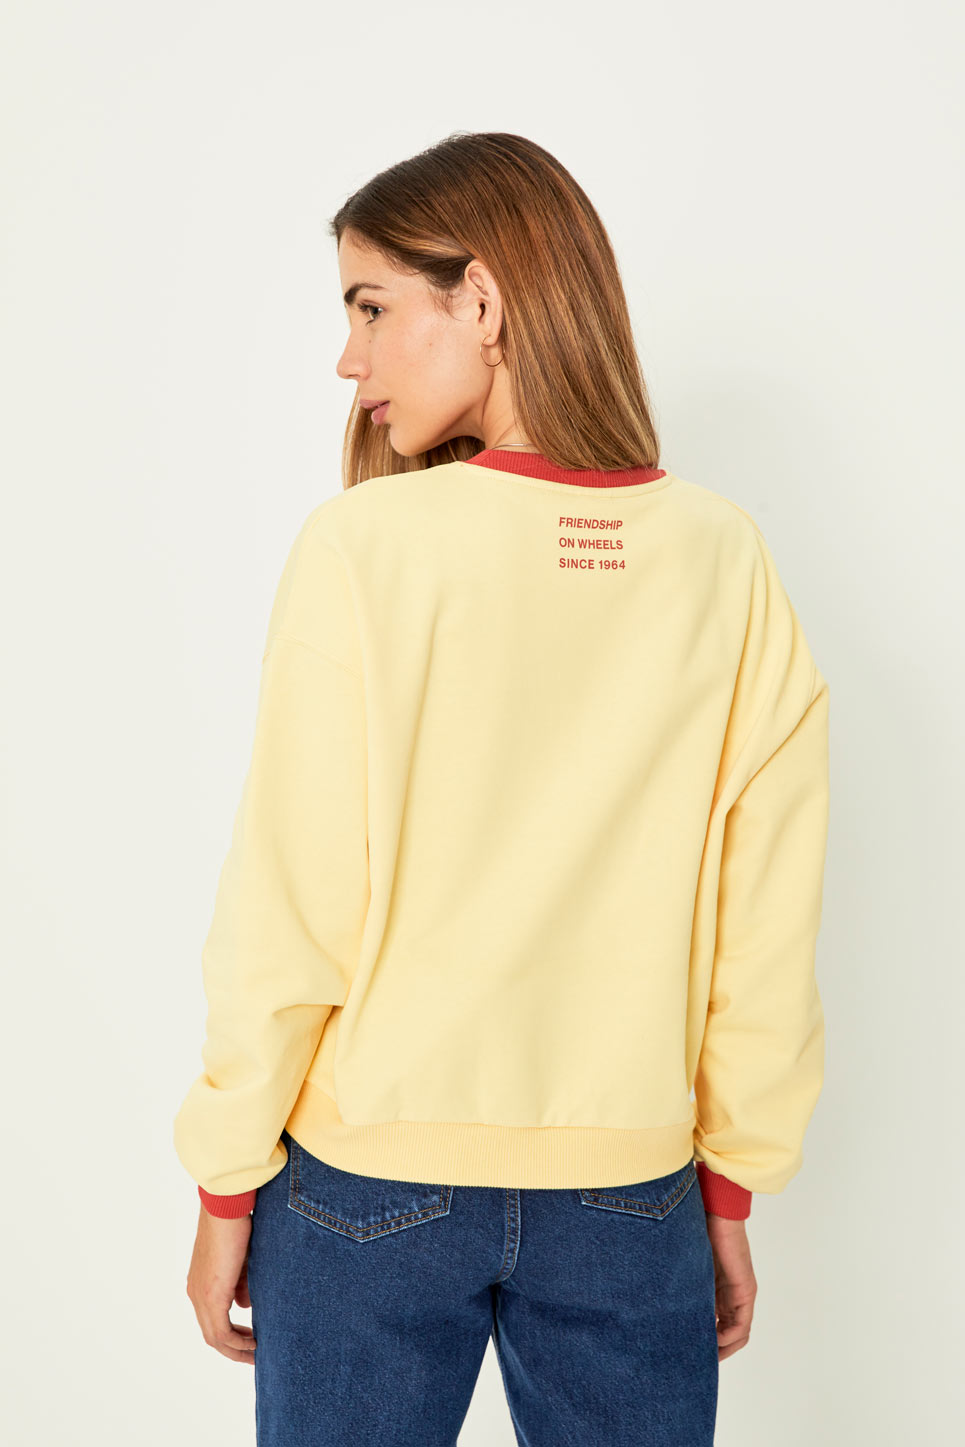 Women's vintage logo sweatshirt (Yellow)